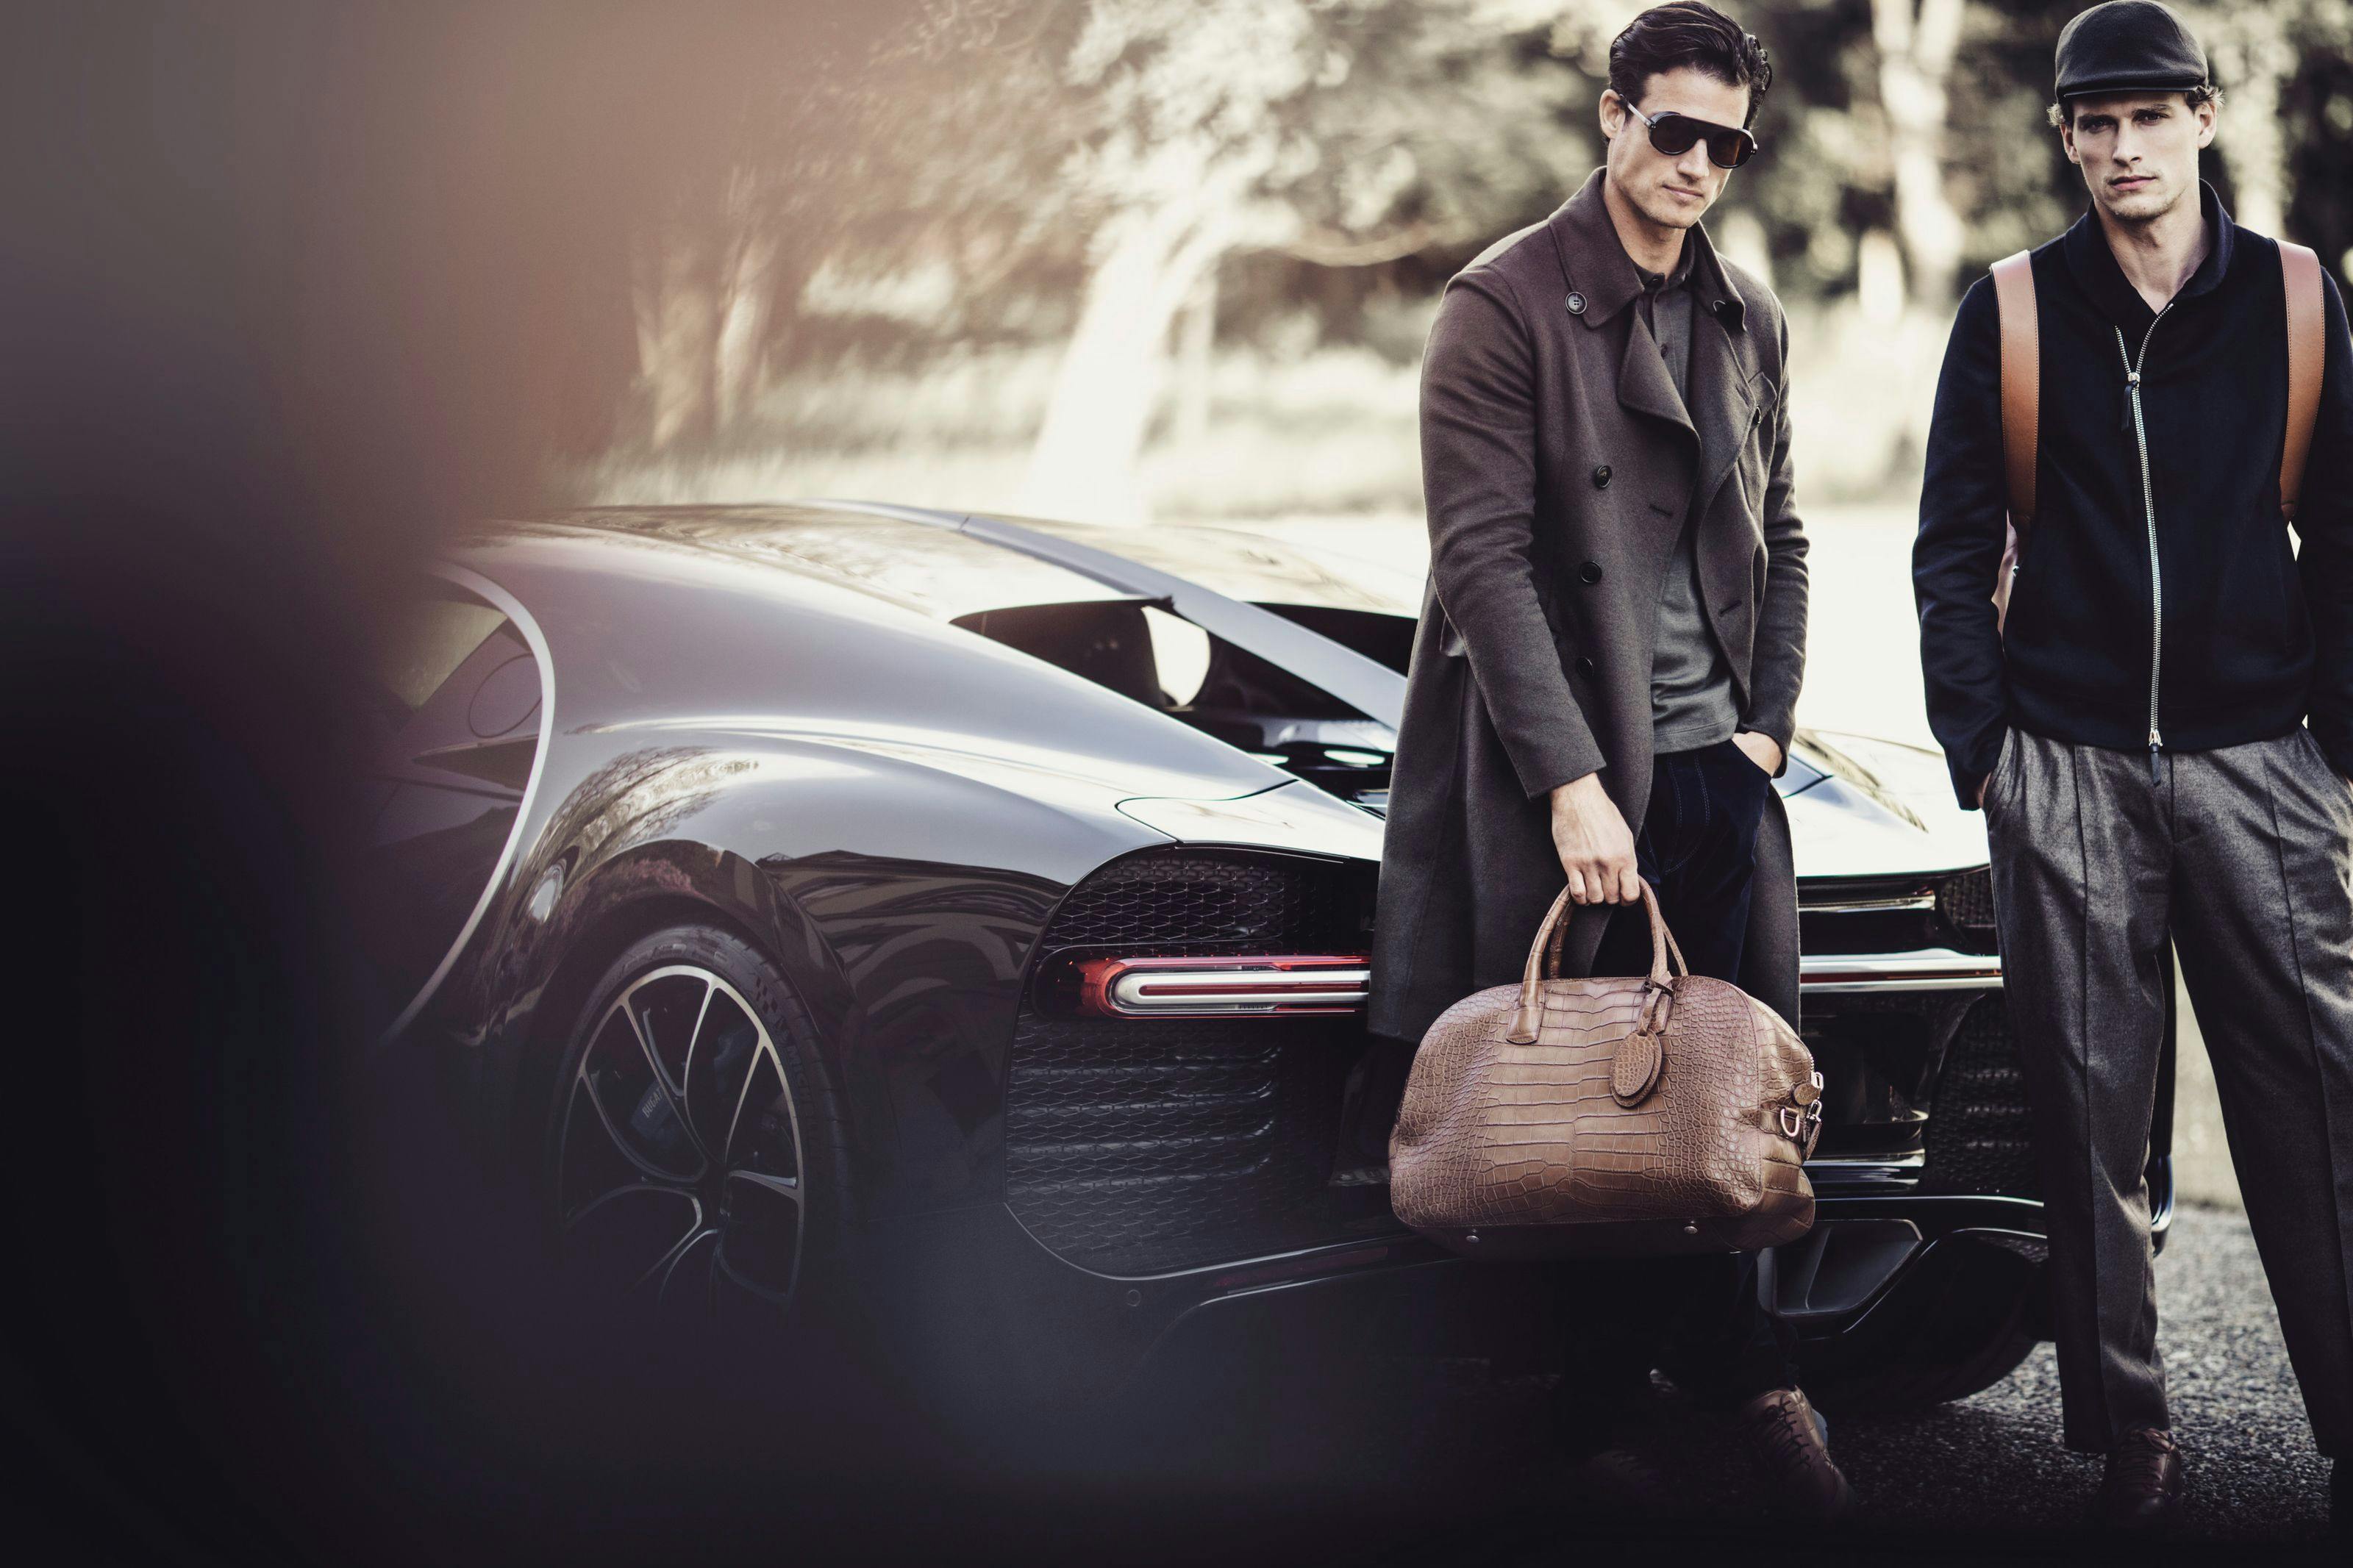 Giorgio Armani collaborates with Bugatti on a limited edition line of products